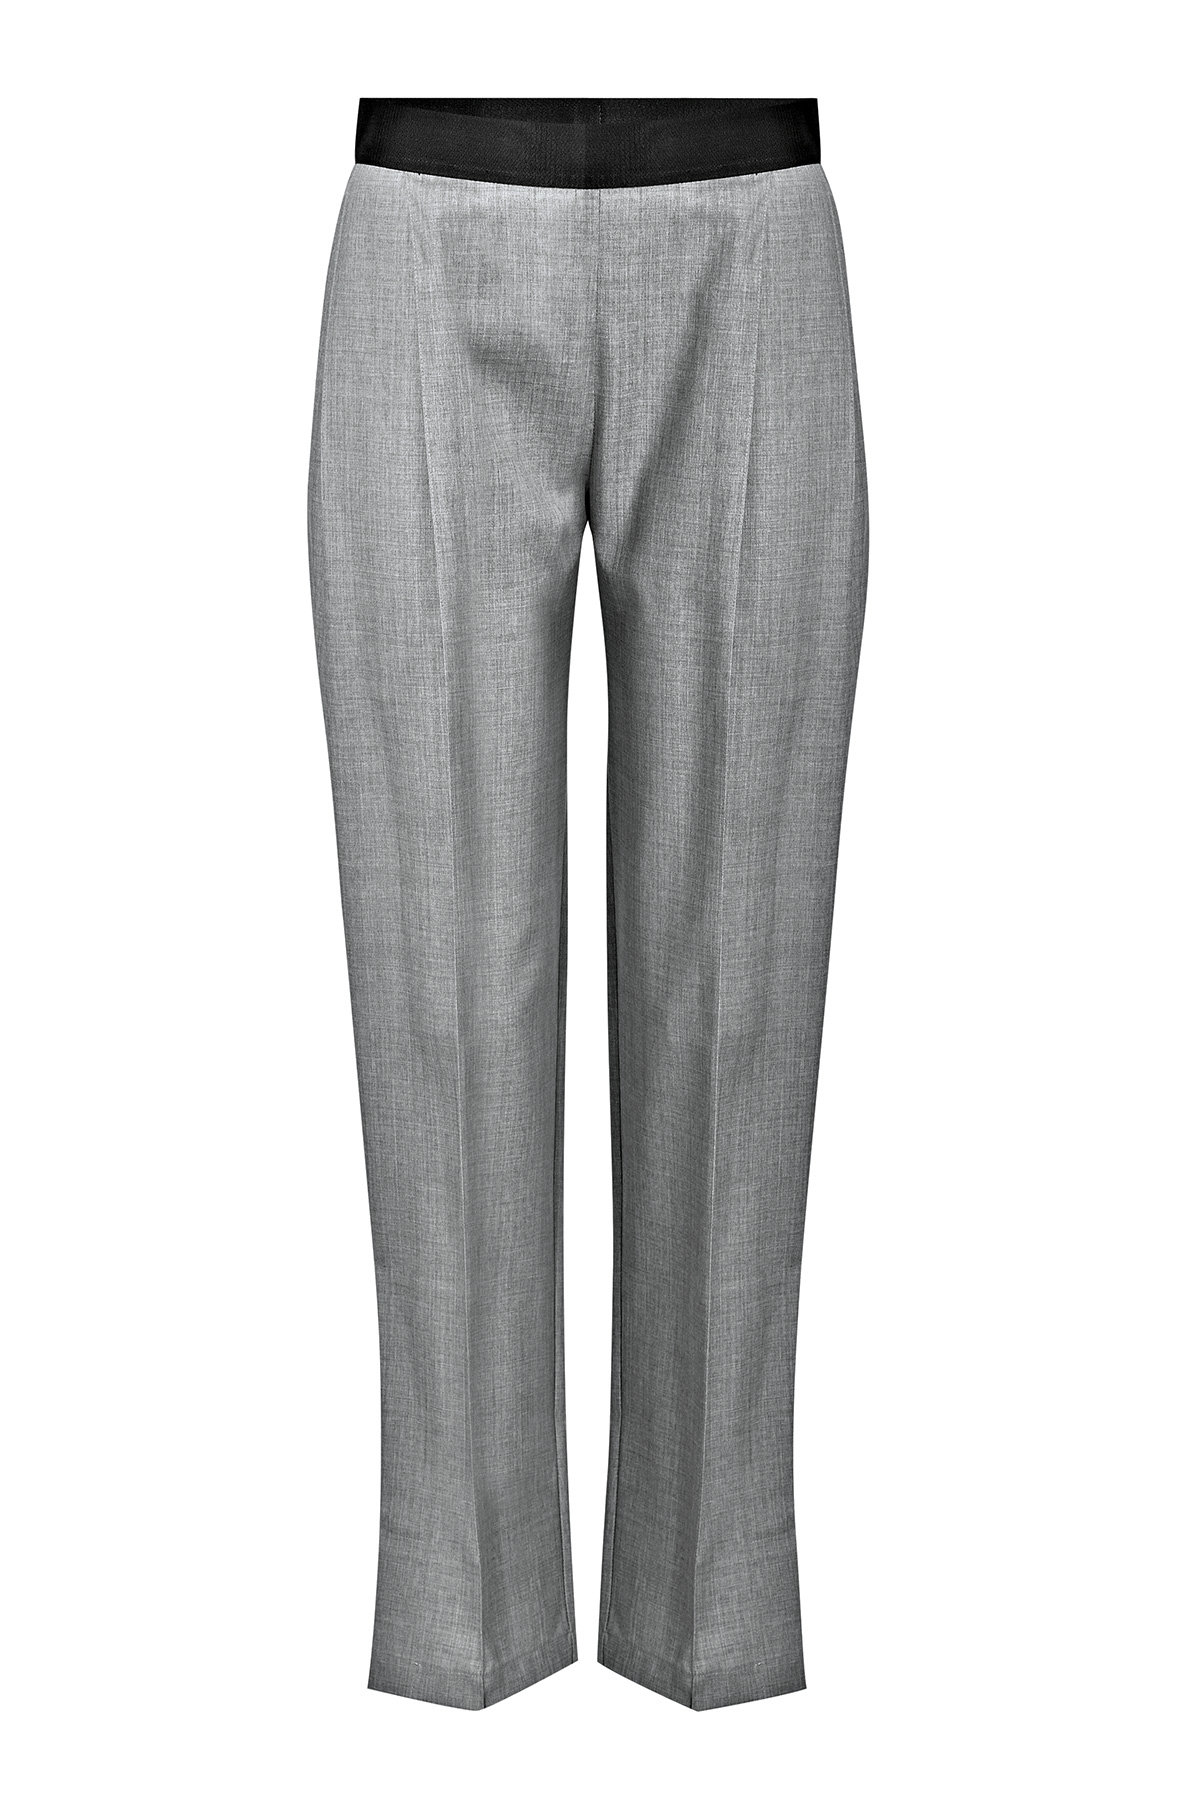 ALYX STUDIO - California Tailored Pants in Virgin Wool